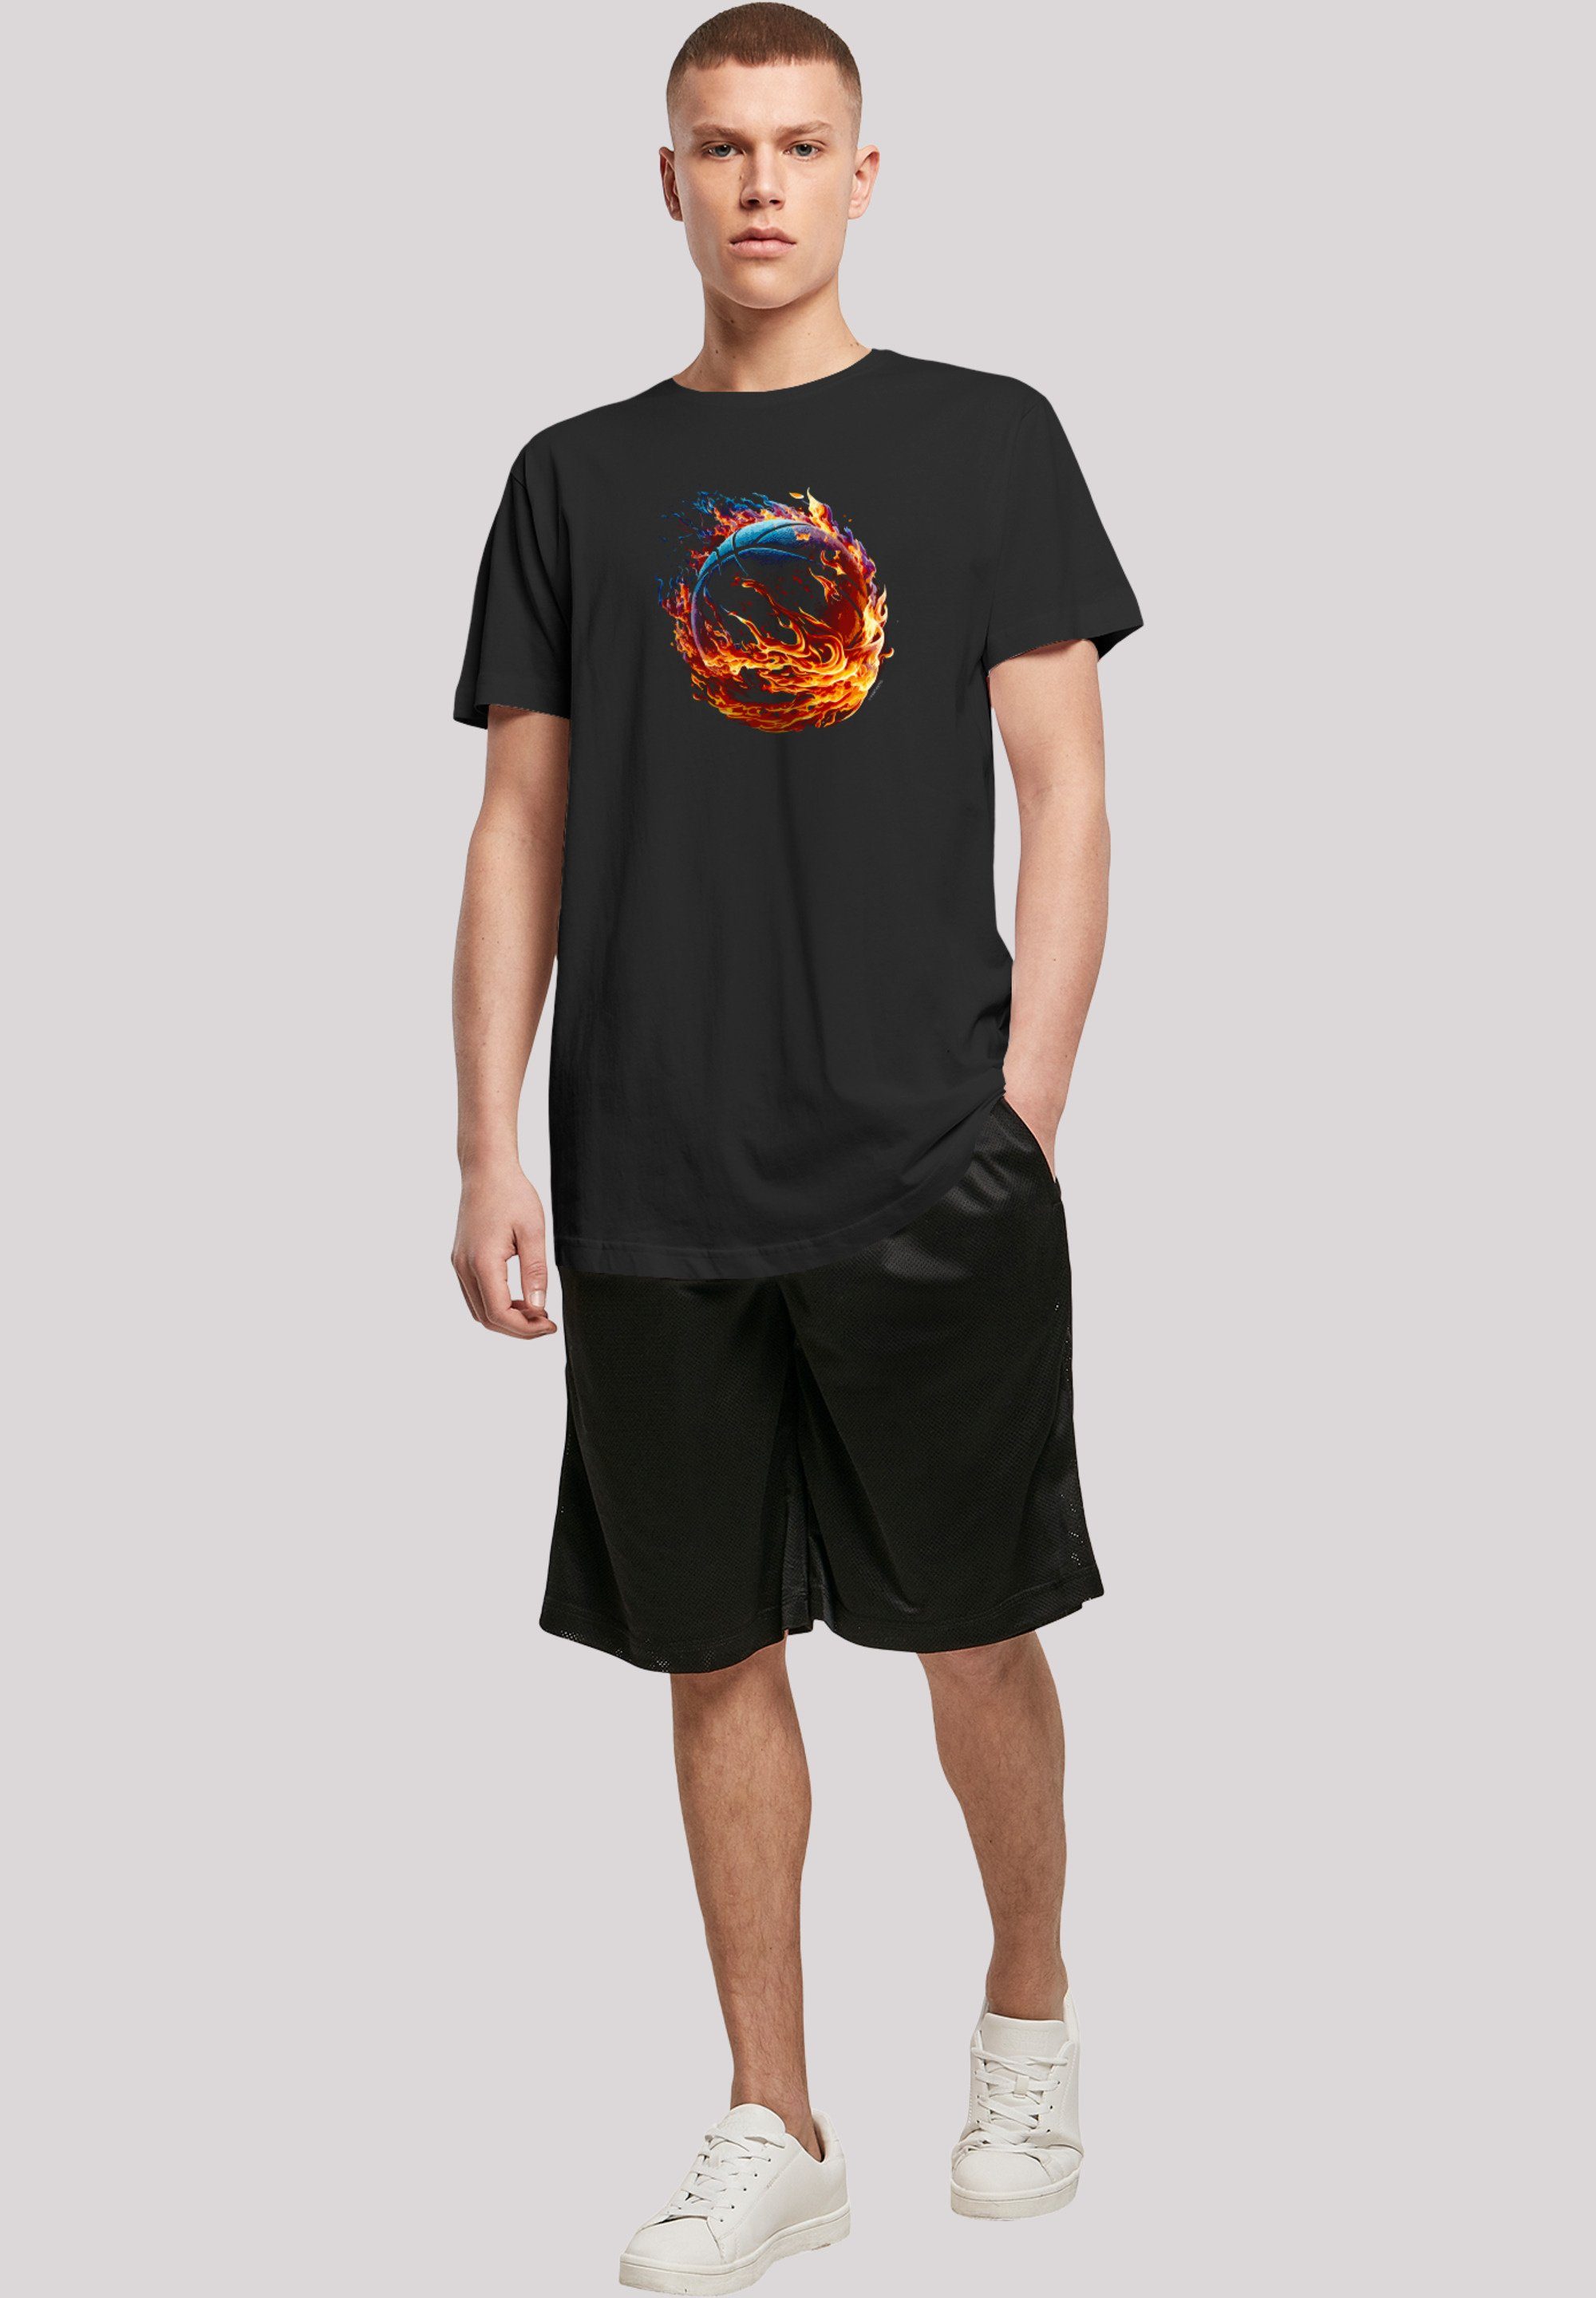 F4NT4STIC T-Shirt Basketball On Fire Print Sport LONG schwarz